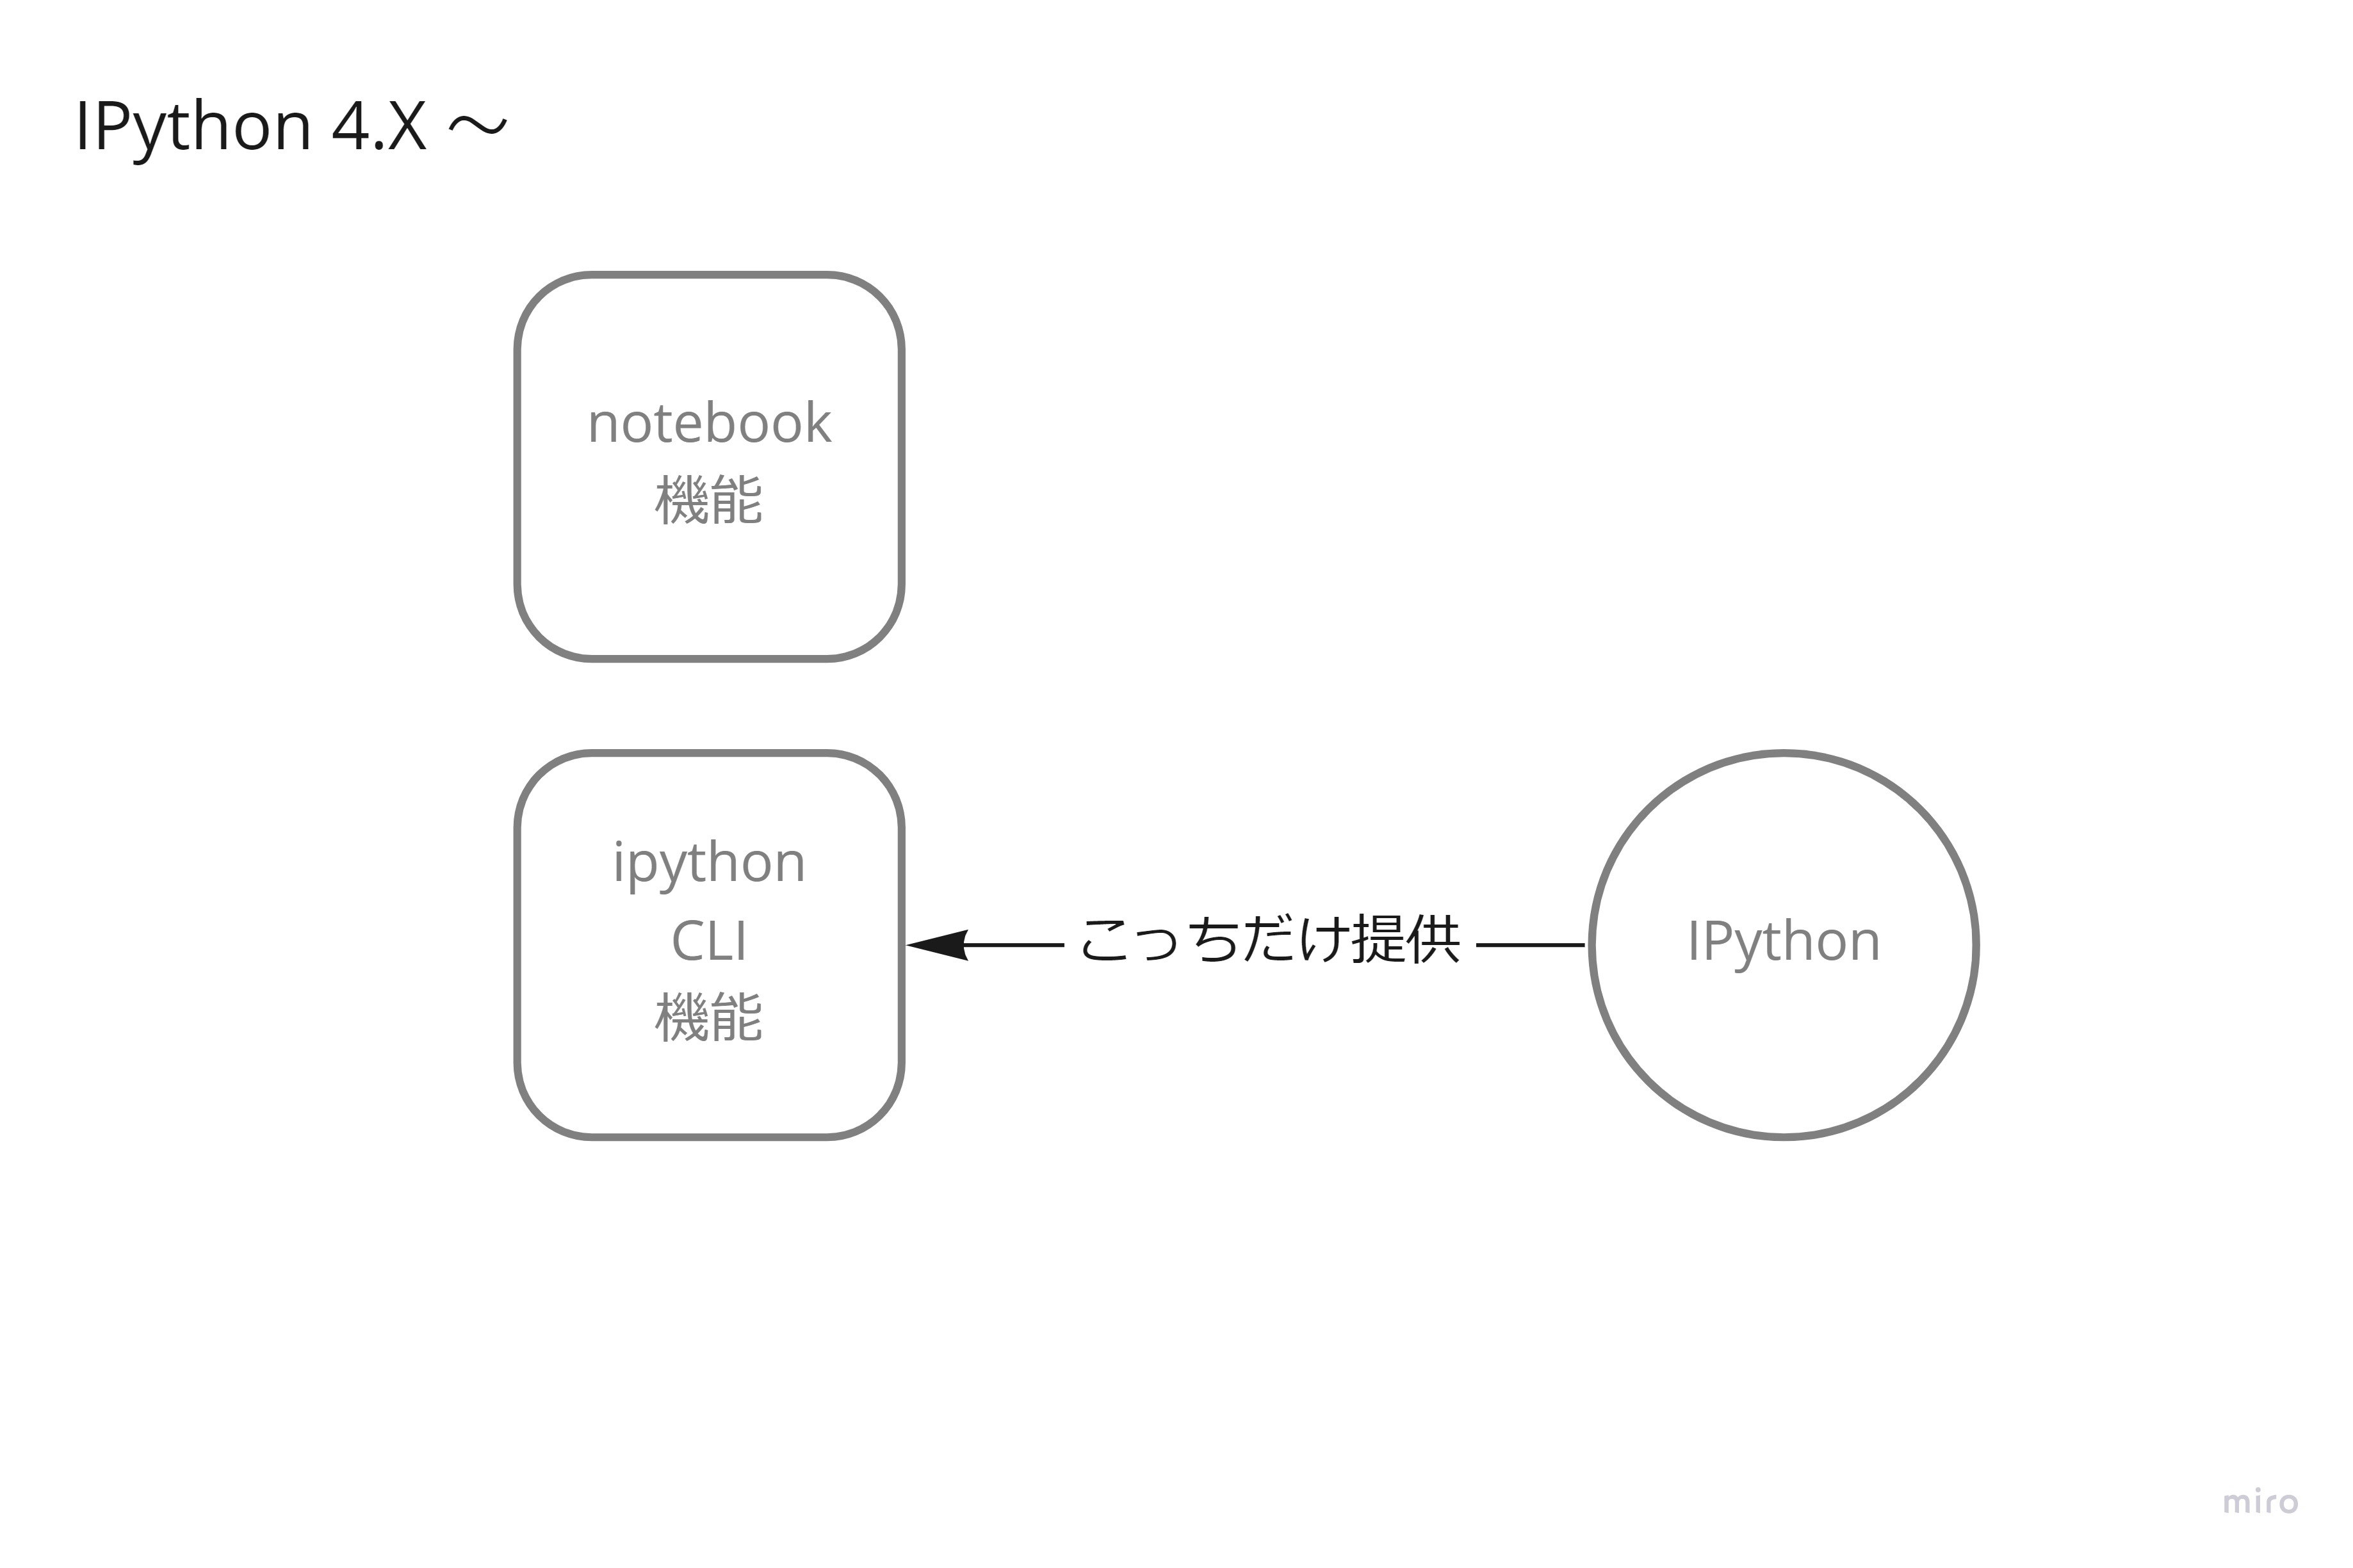 Copy of ipython 4.X.jpg